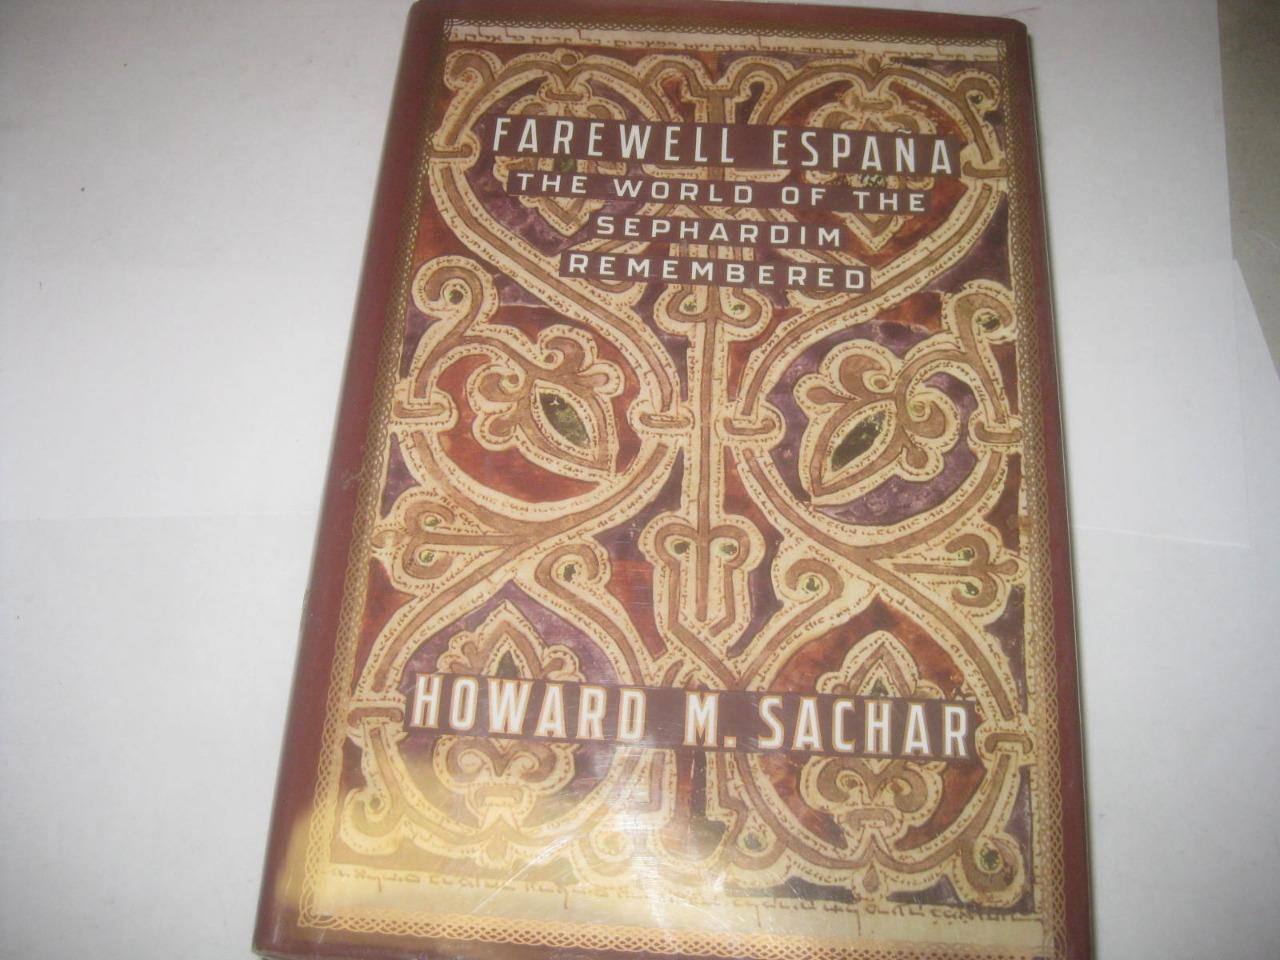 Farewell espana: the world of the sephardim remembered by howard m. sachar